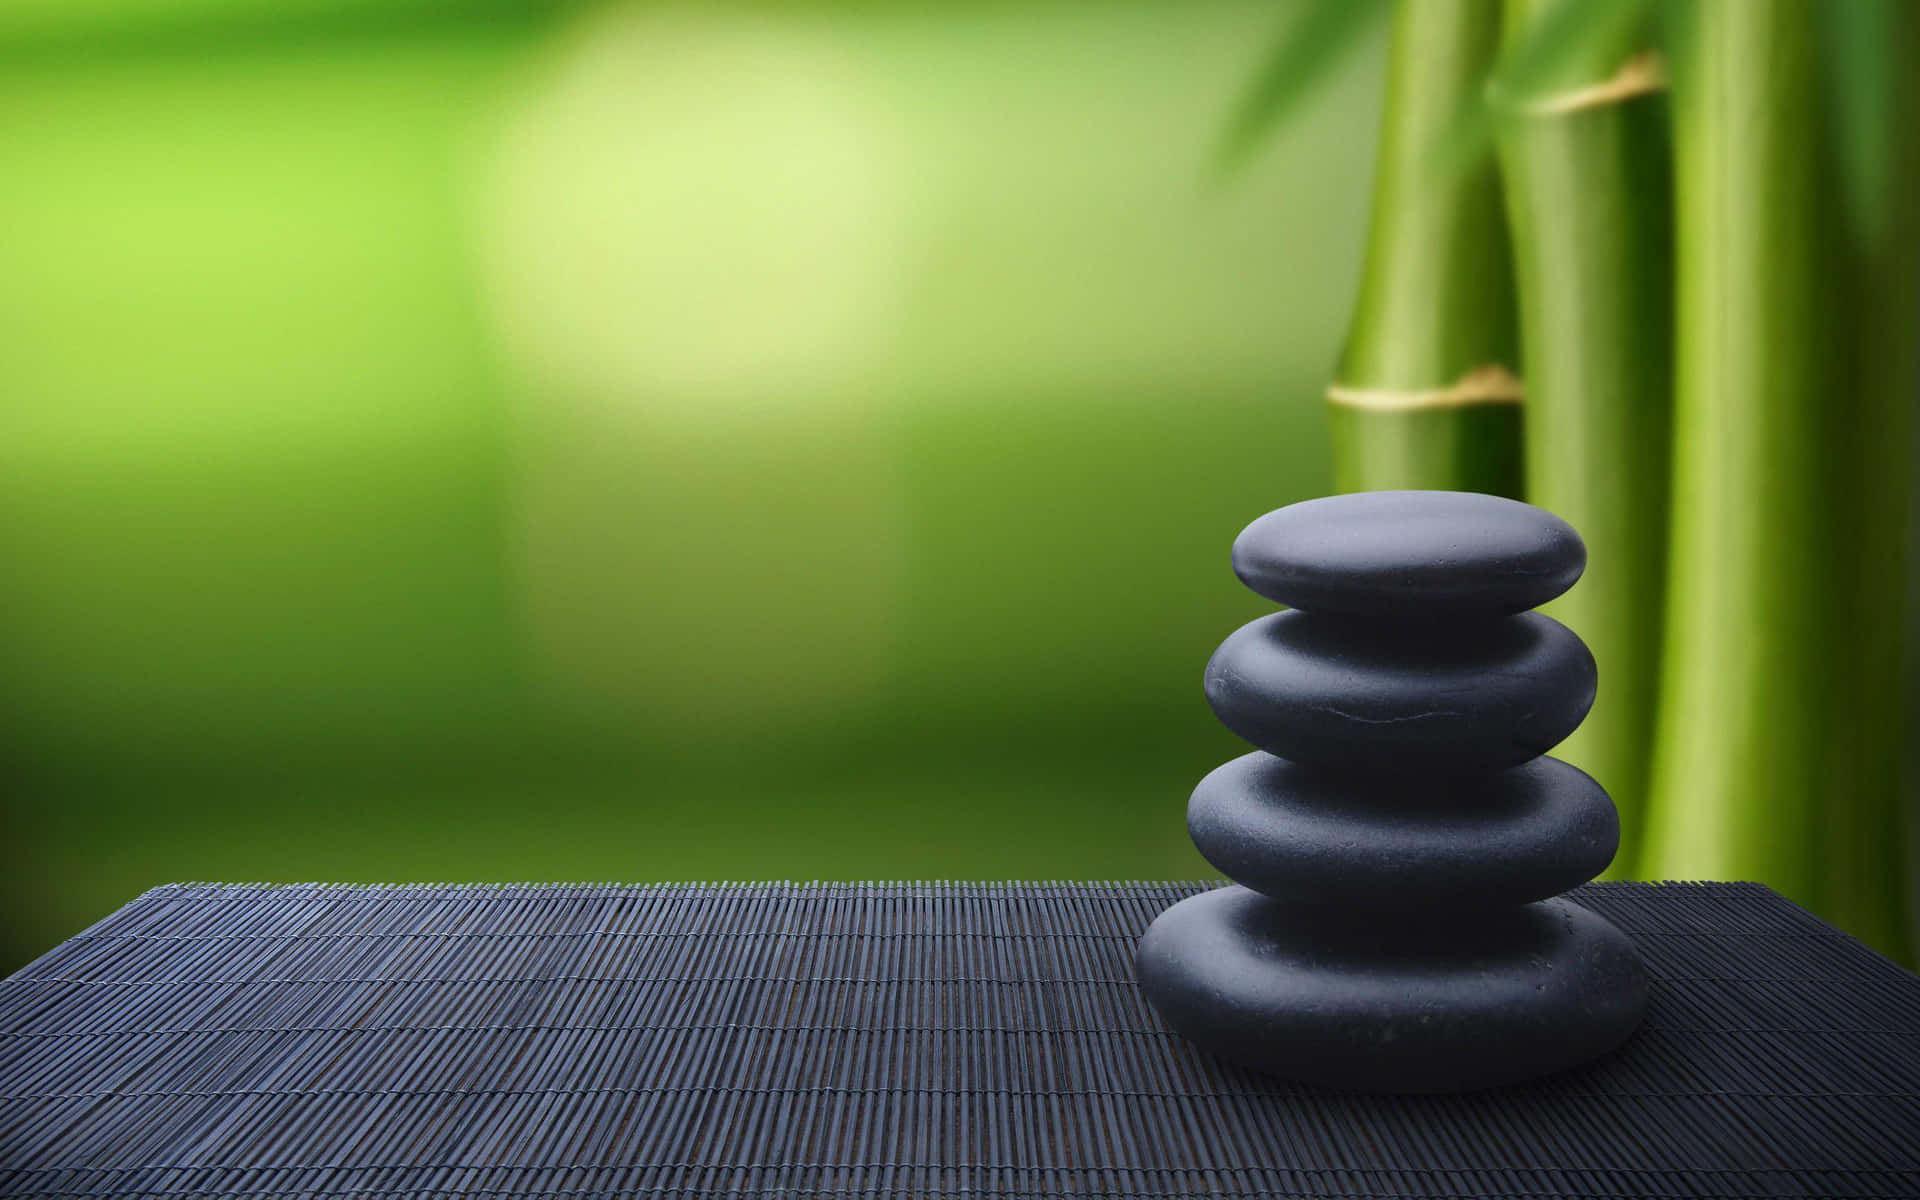 Balancing Stones With Bamboo Desktop Wallpaper